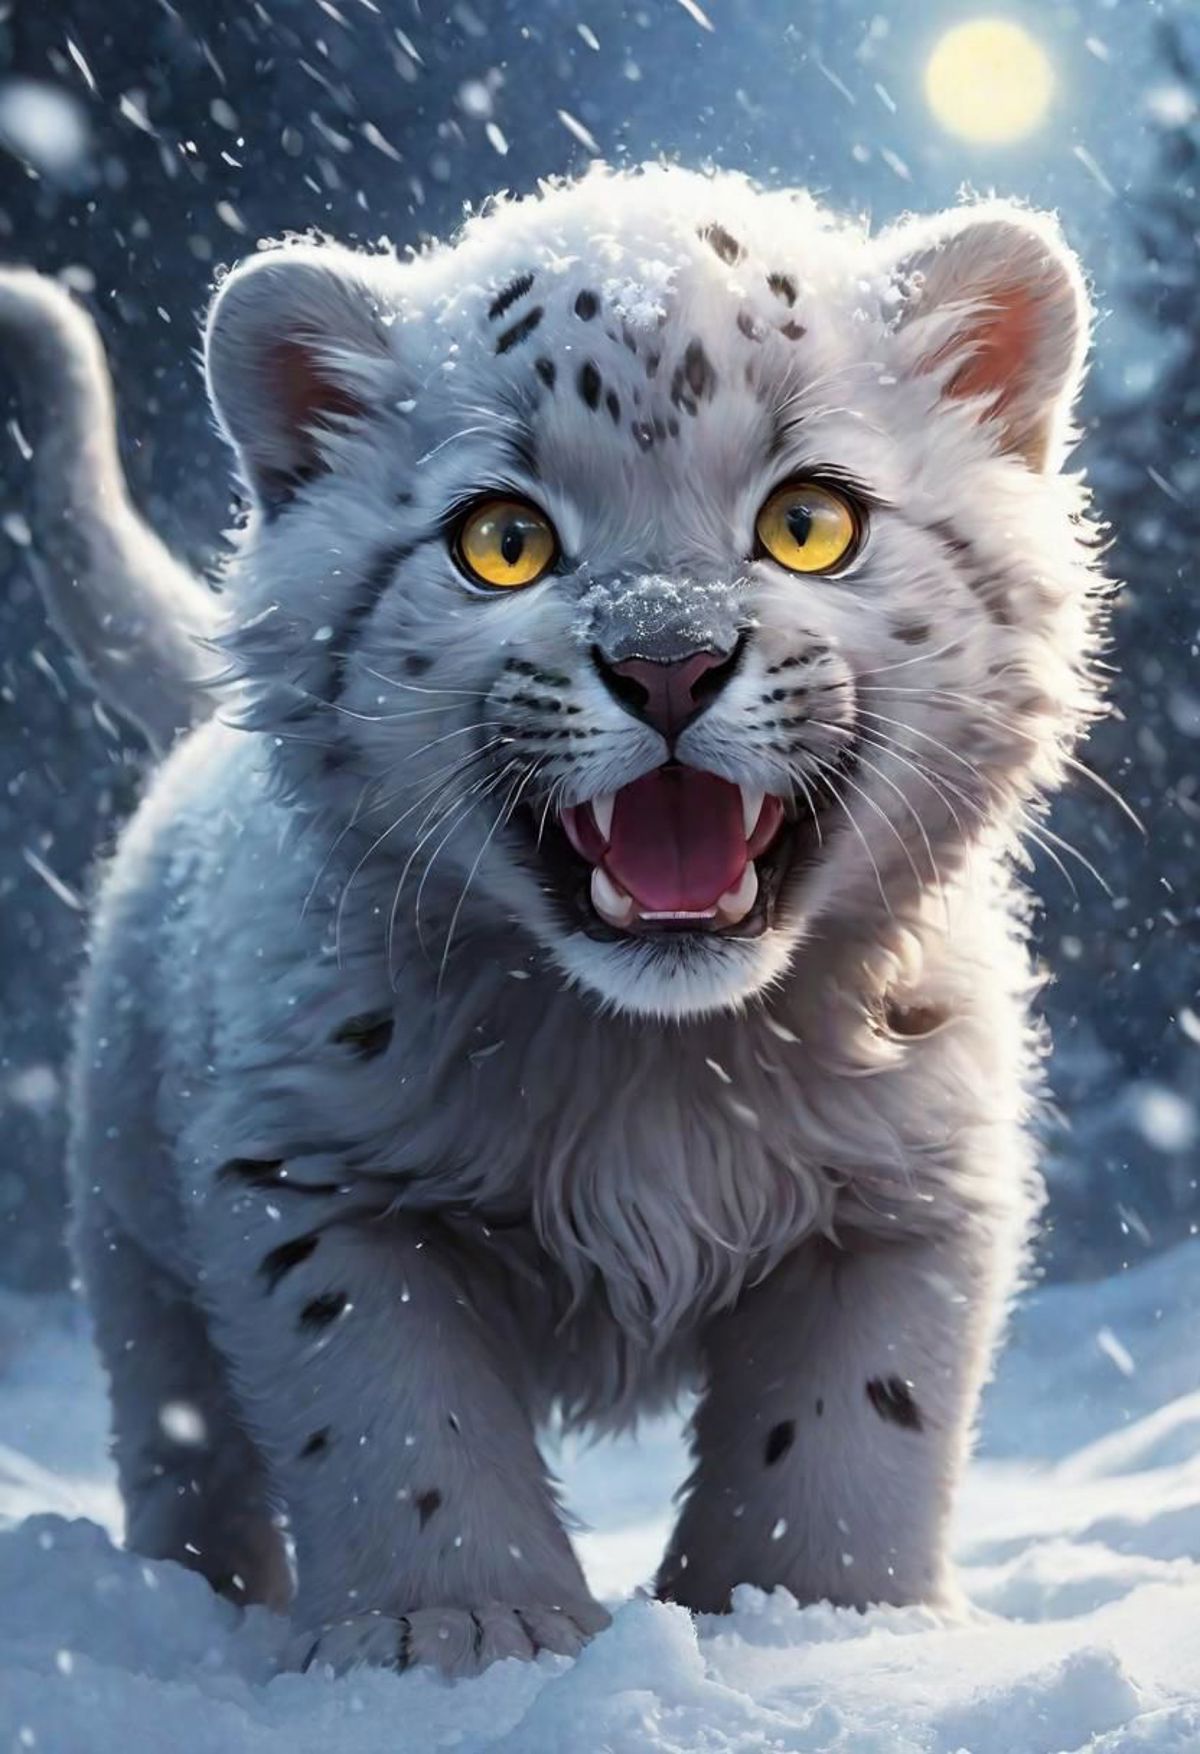 Snowy Tiger Cub with Yellow Eyes